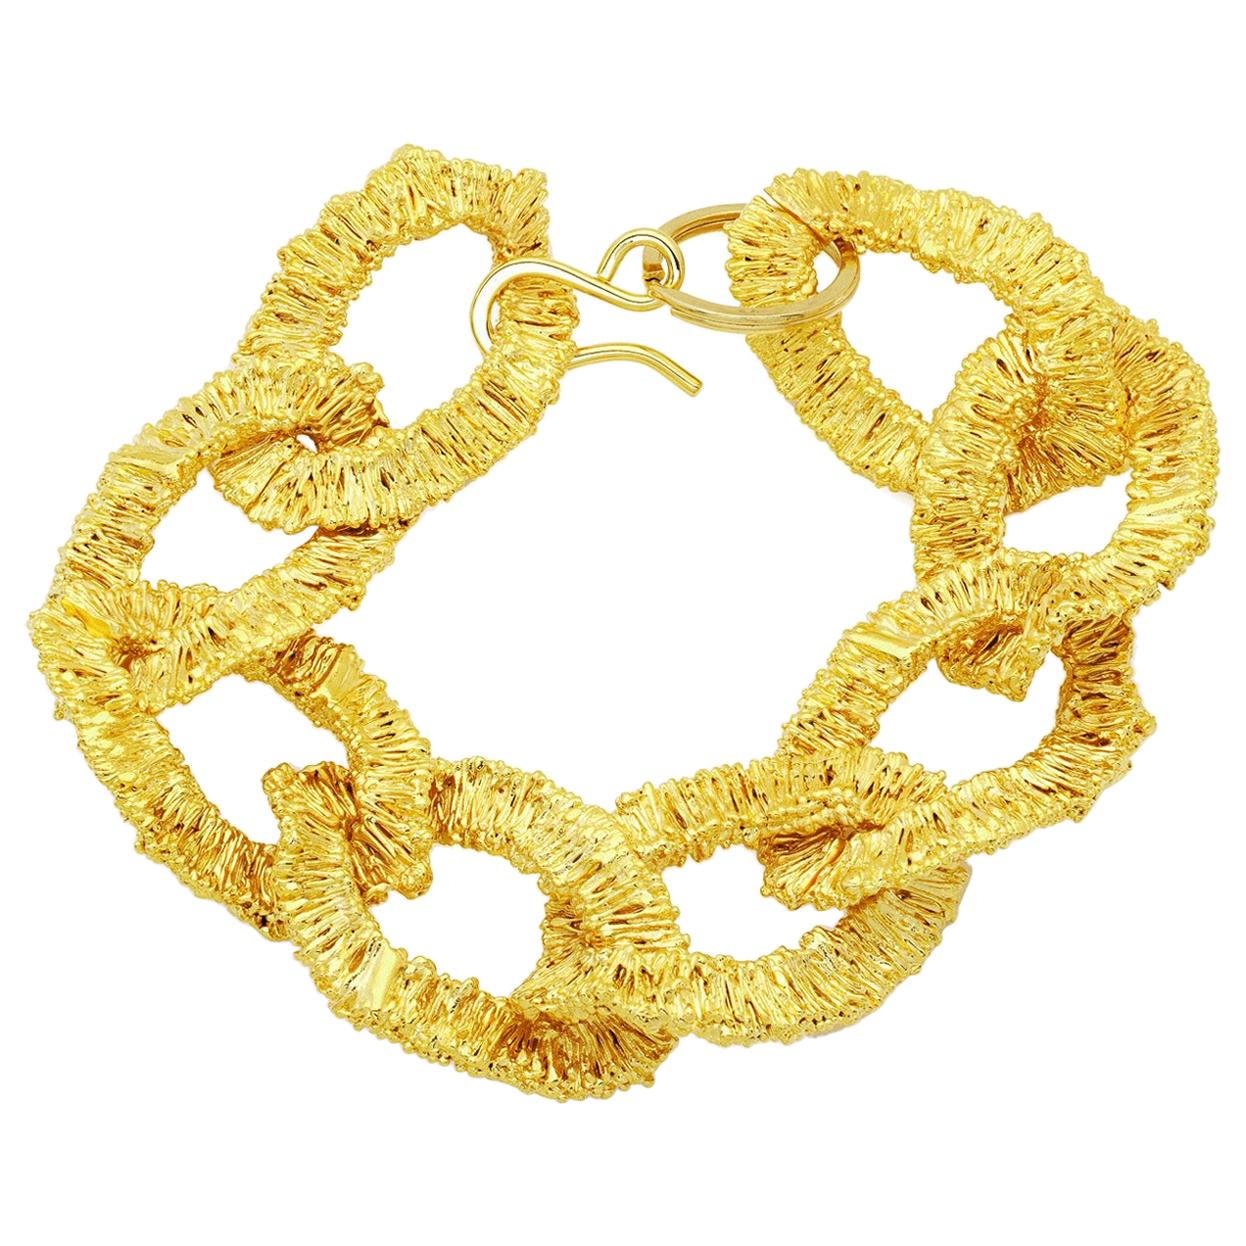  Barbosa 'Stellar' Link Bracelet in Gold Plated Brass For Sale